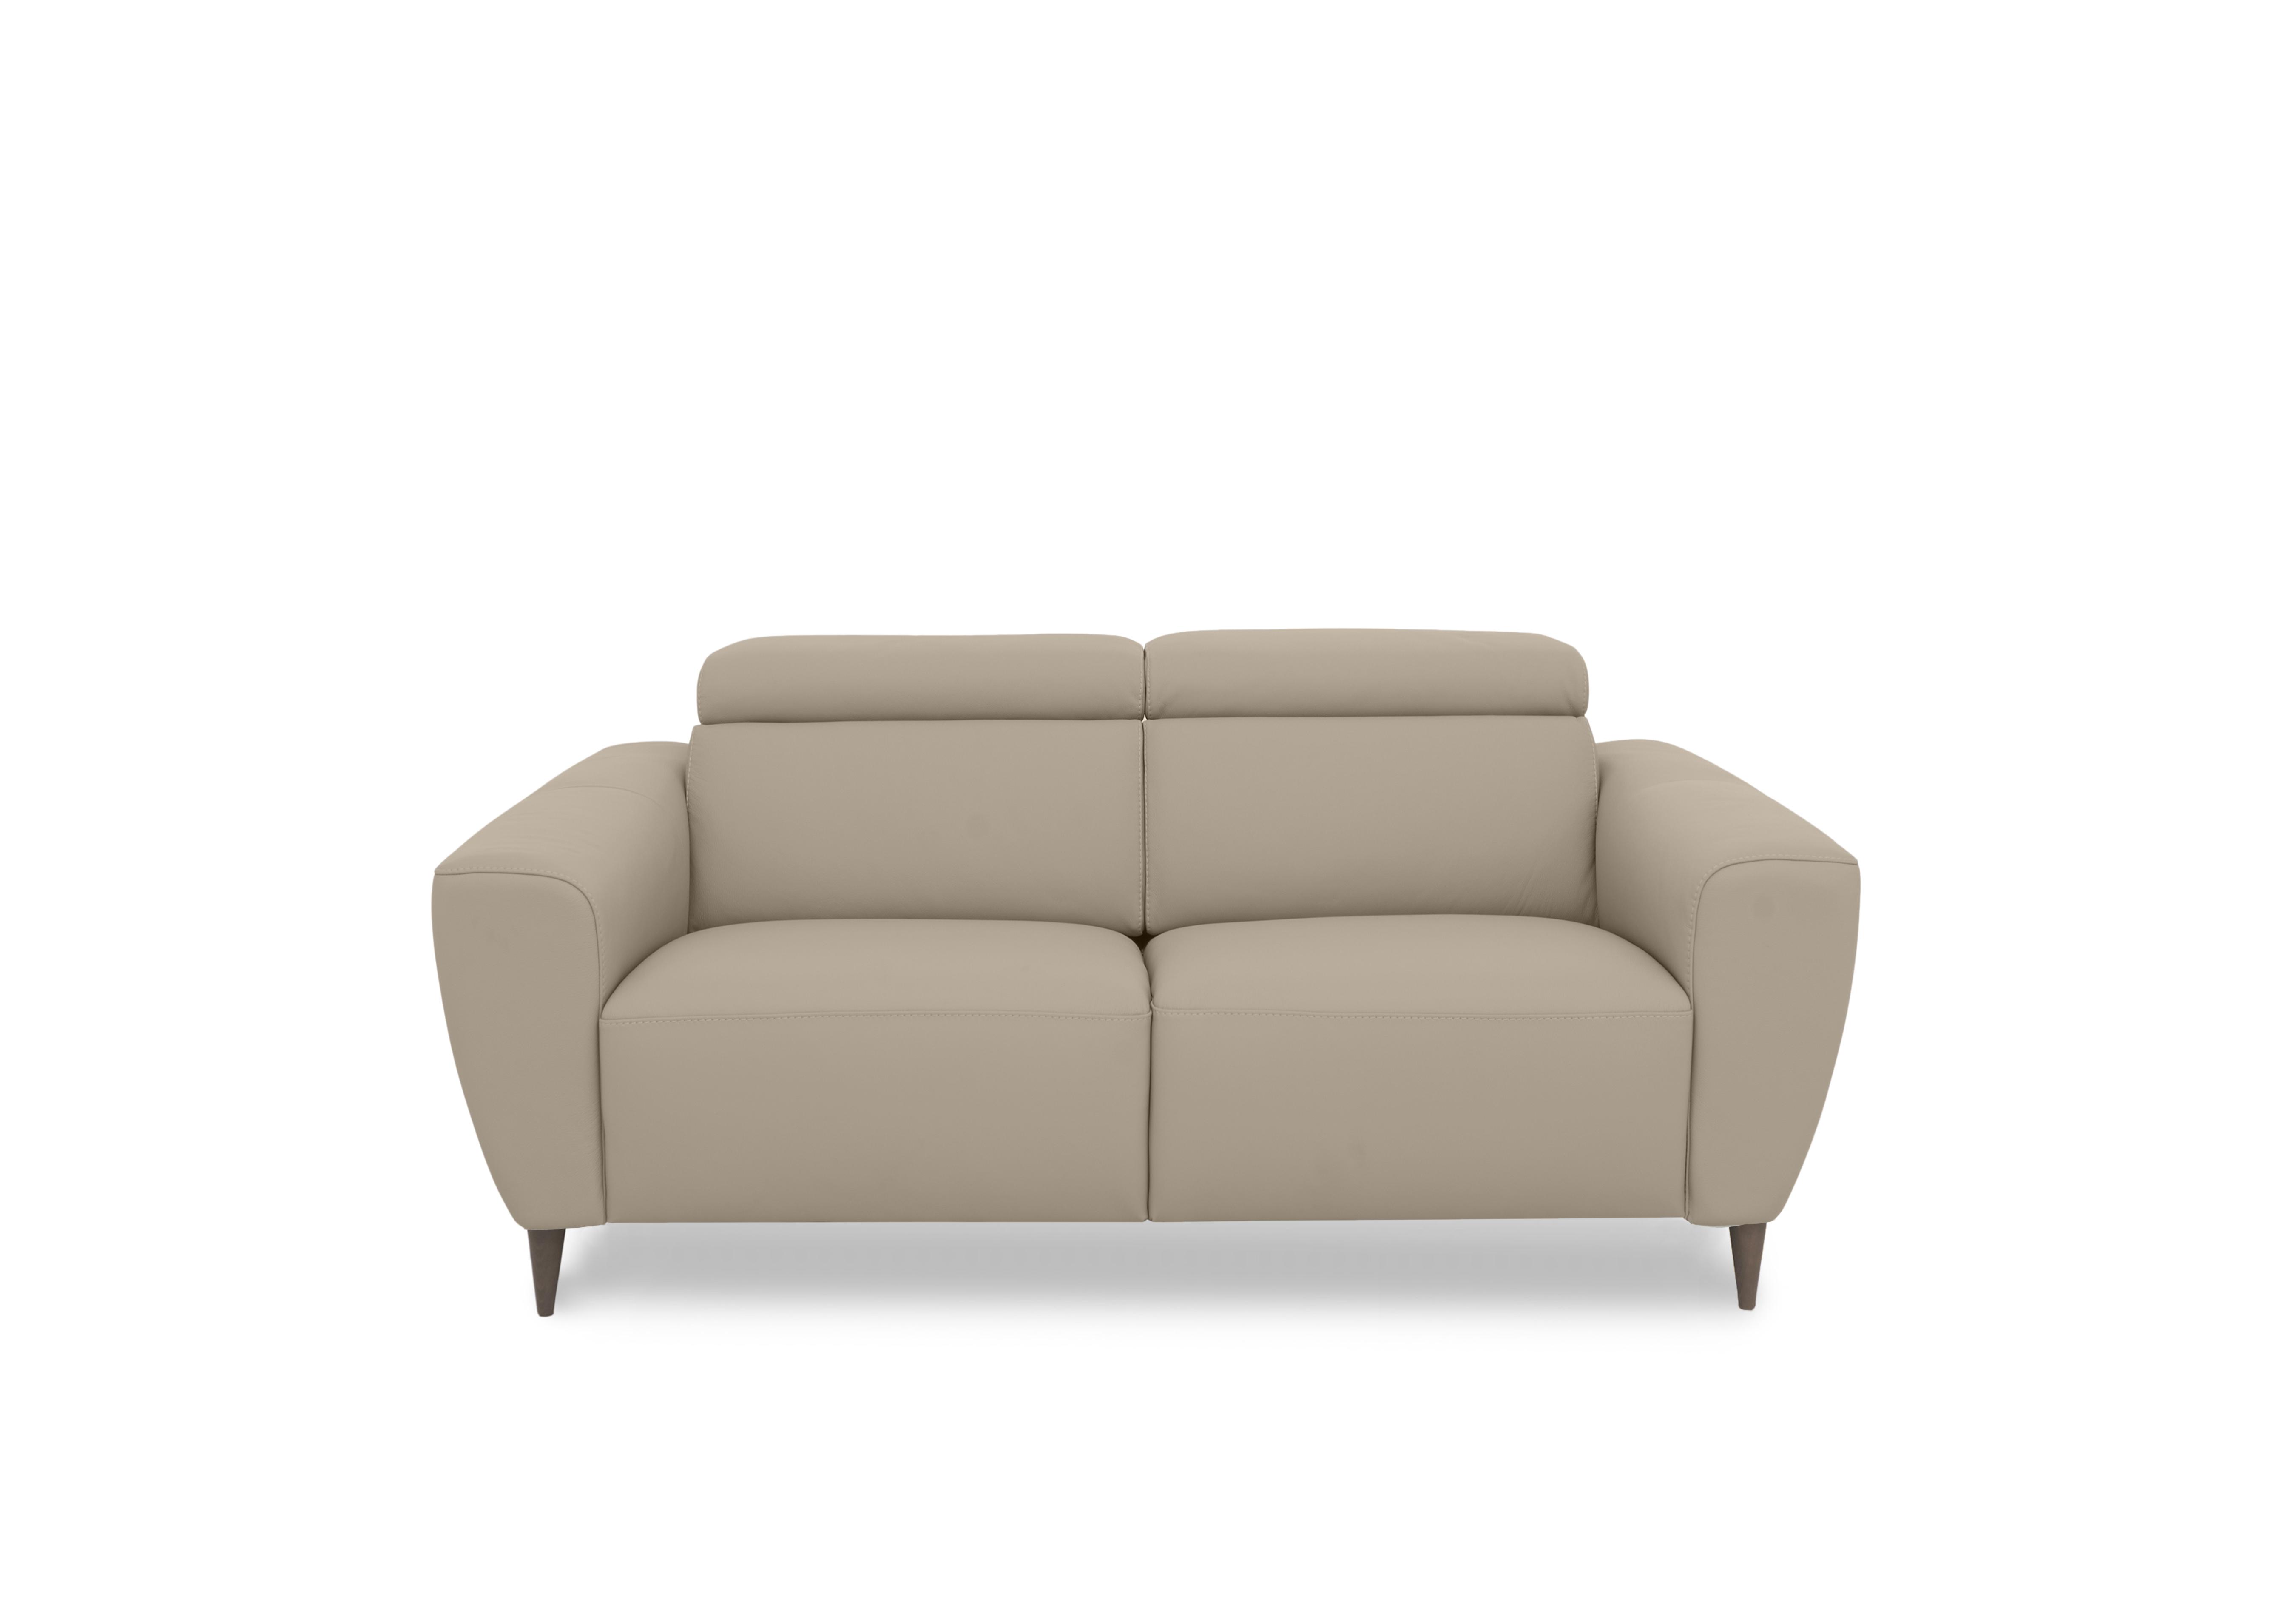 Milano 2 Seater Leather Sofa in 352 Torello Fango To Ft on Furniture Village